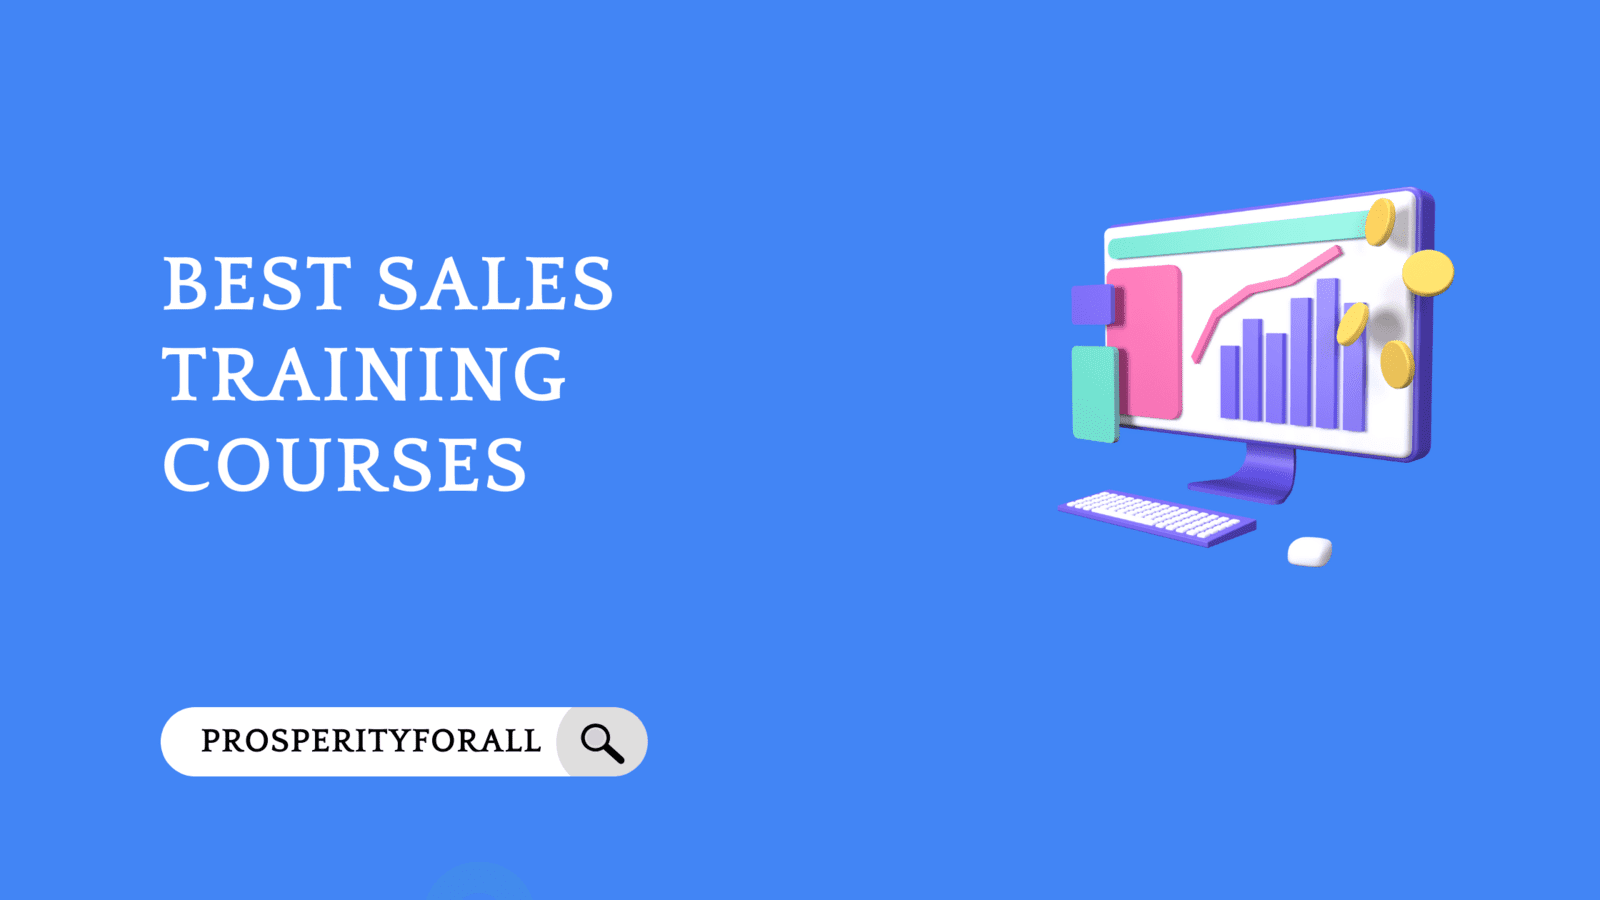 Best Sales Training Courses - ProsperityForAll